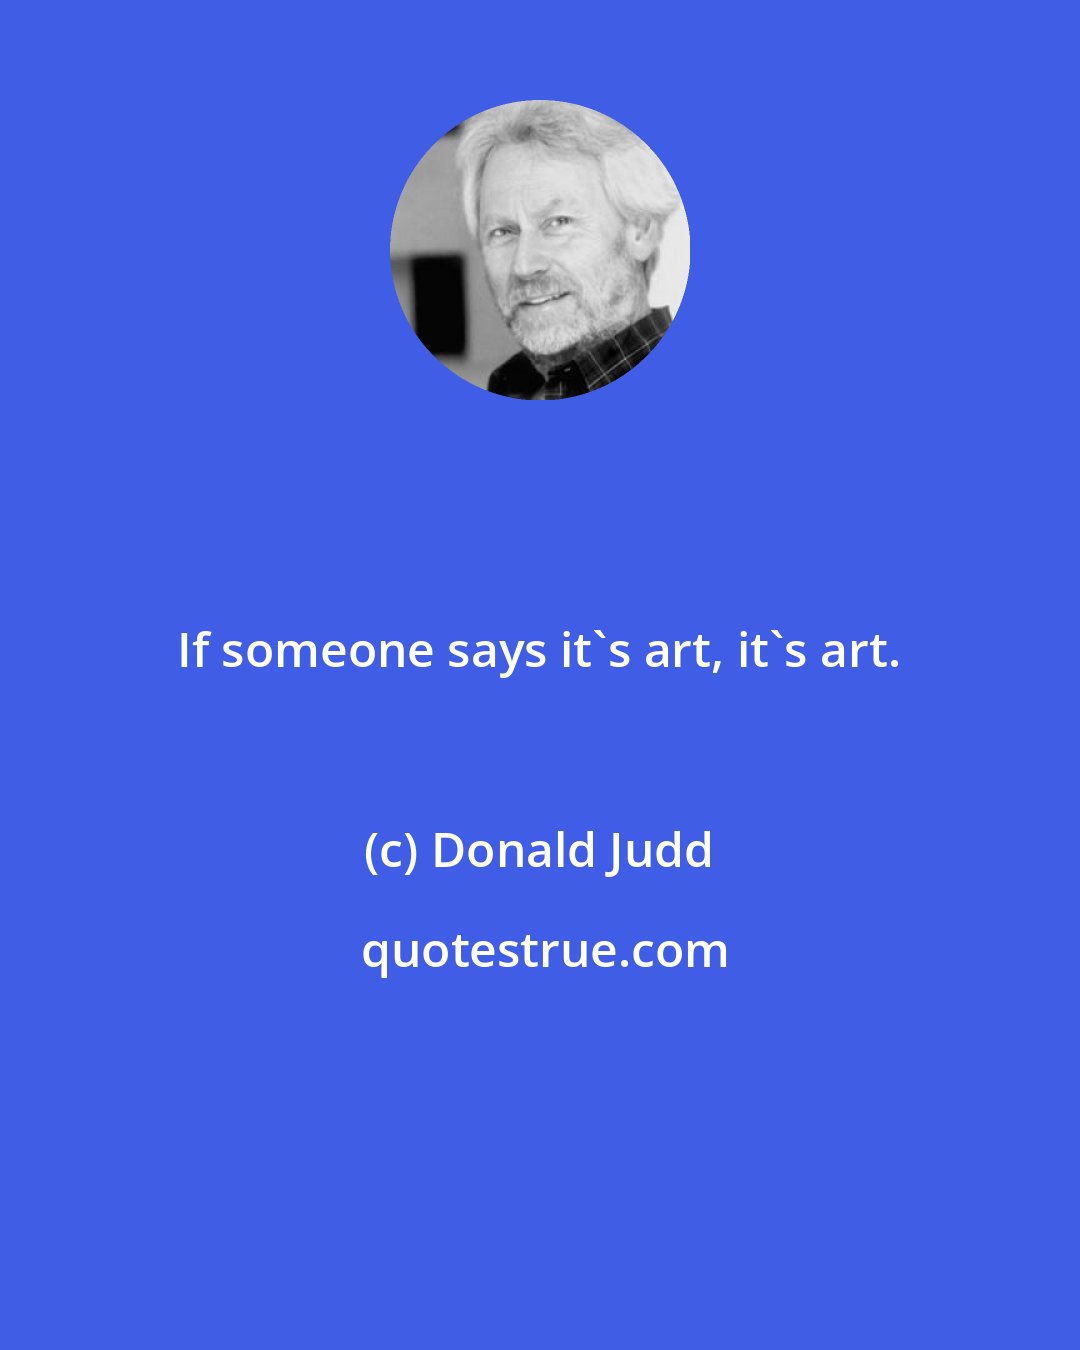 Donald Judd: If someone says it's art, it's art.